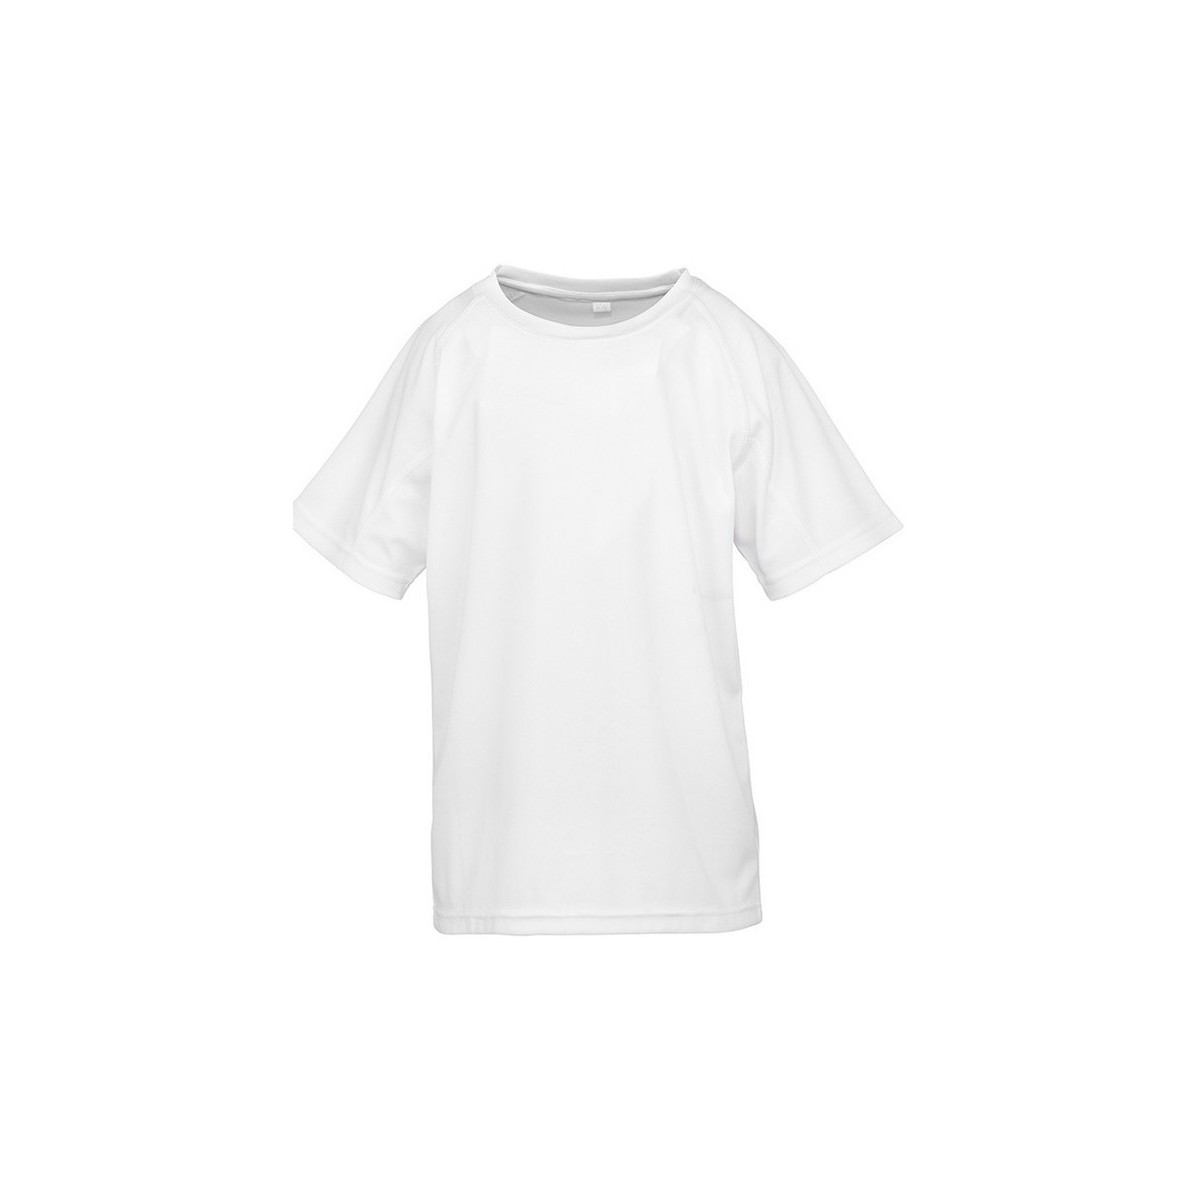 Vêtements Enfant T-shirts manches courtes Spiro SR287B Blanc